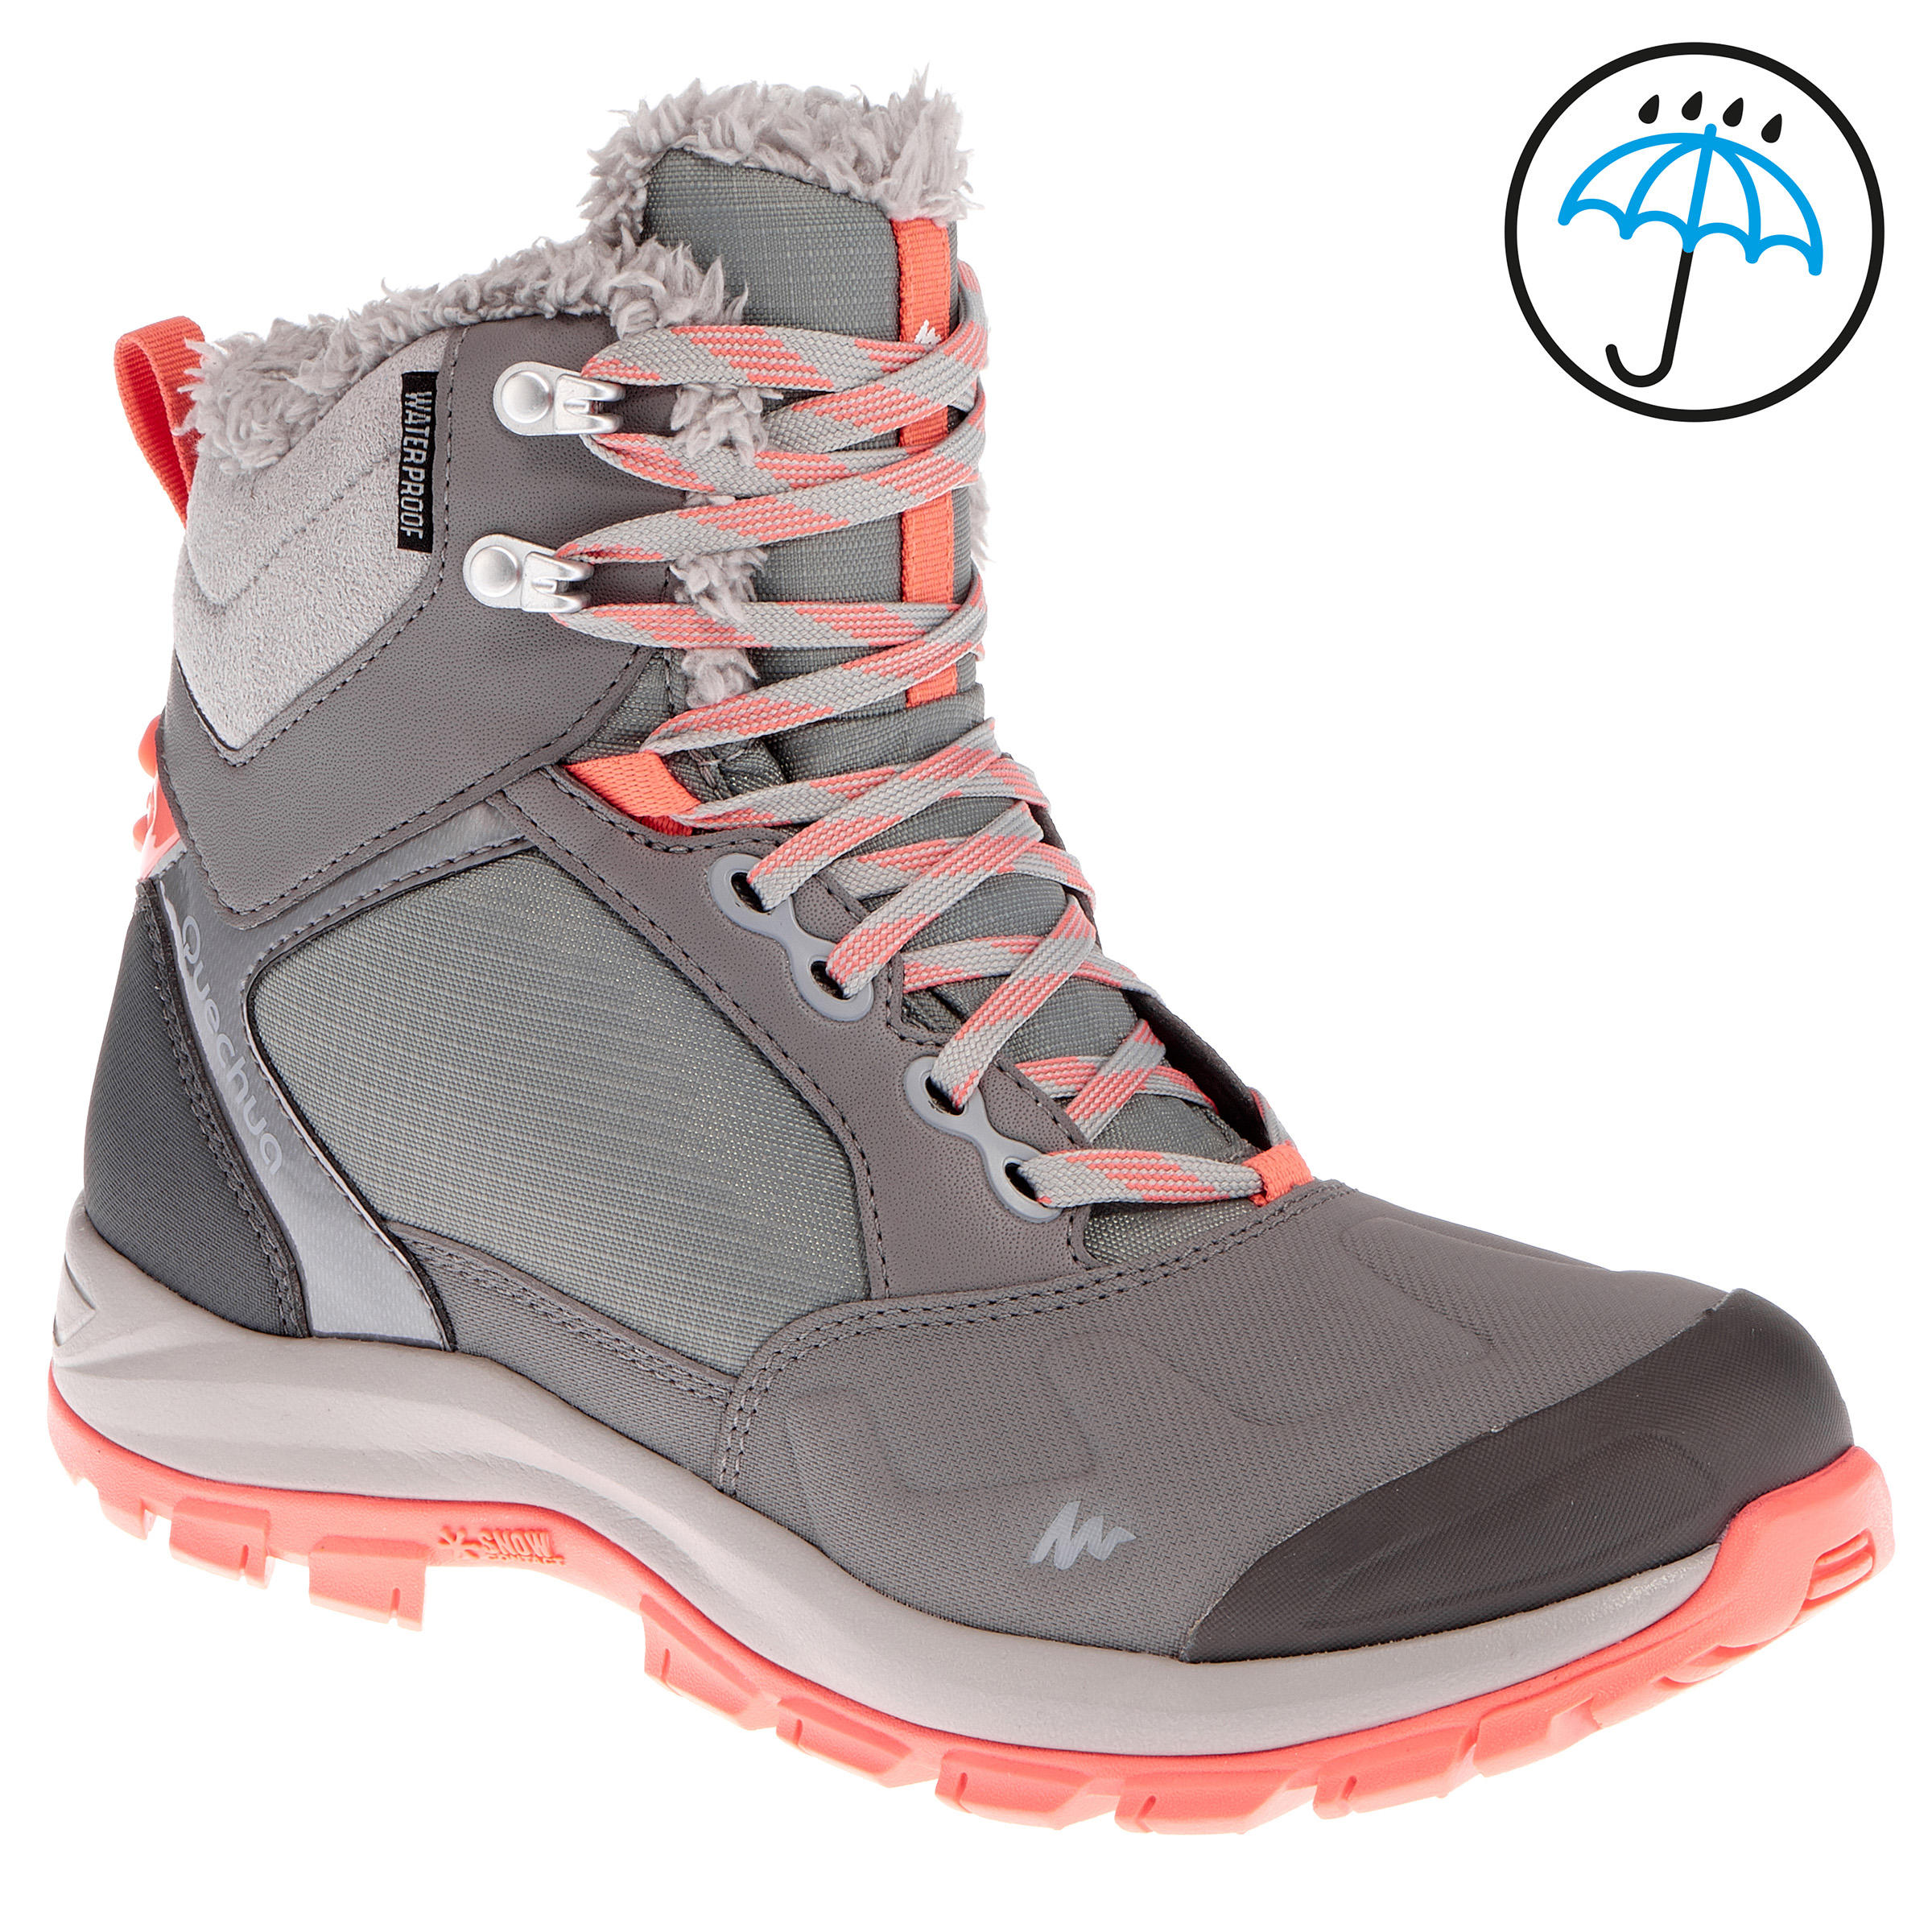 QUECHUA Forclaz Flex 500 Warm Waterproof Women'S Hiking Boots - Grey Coral